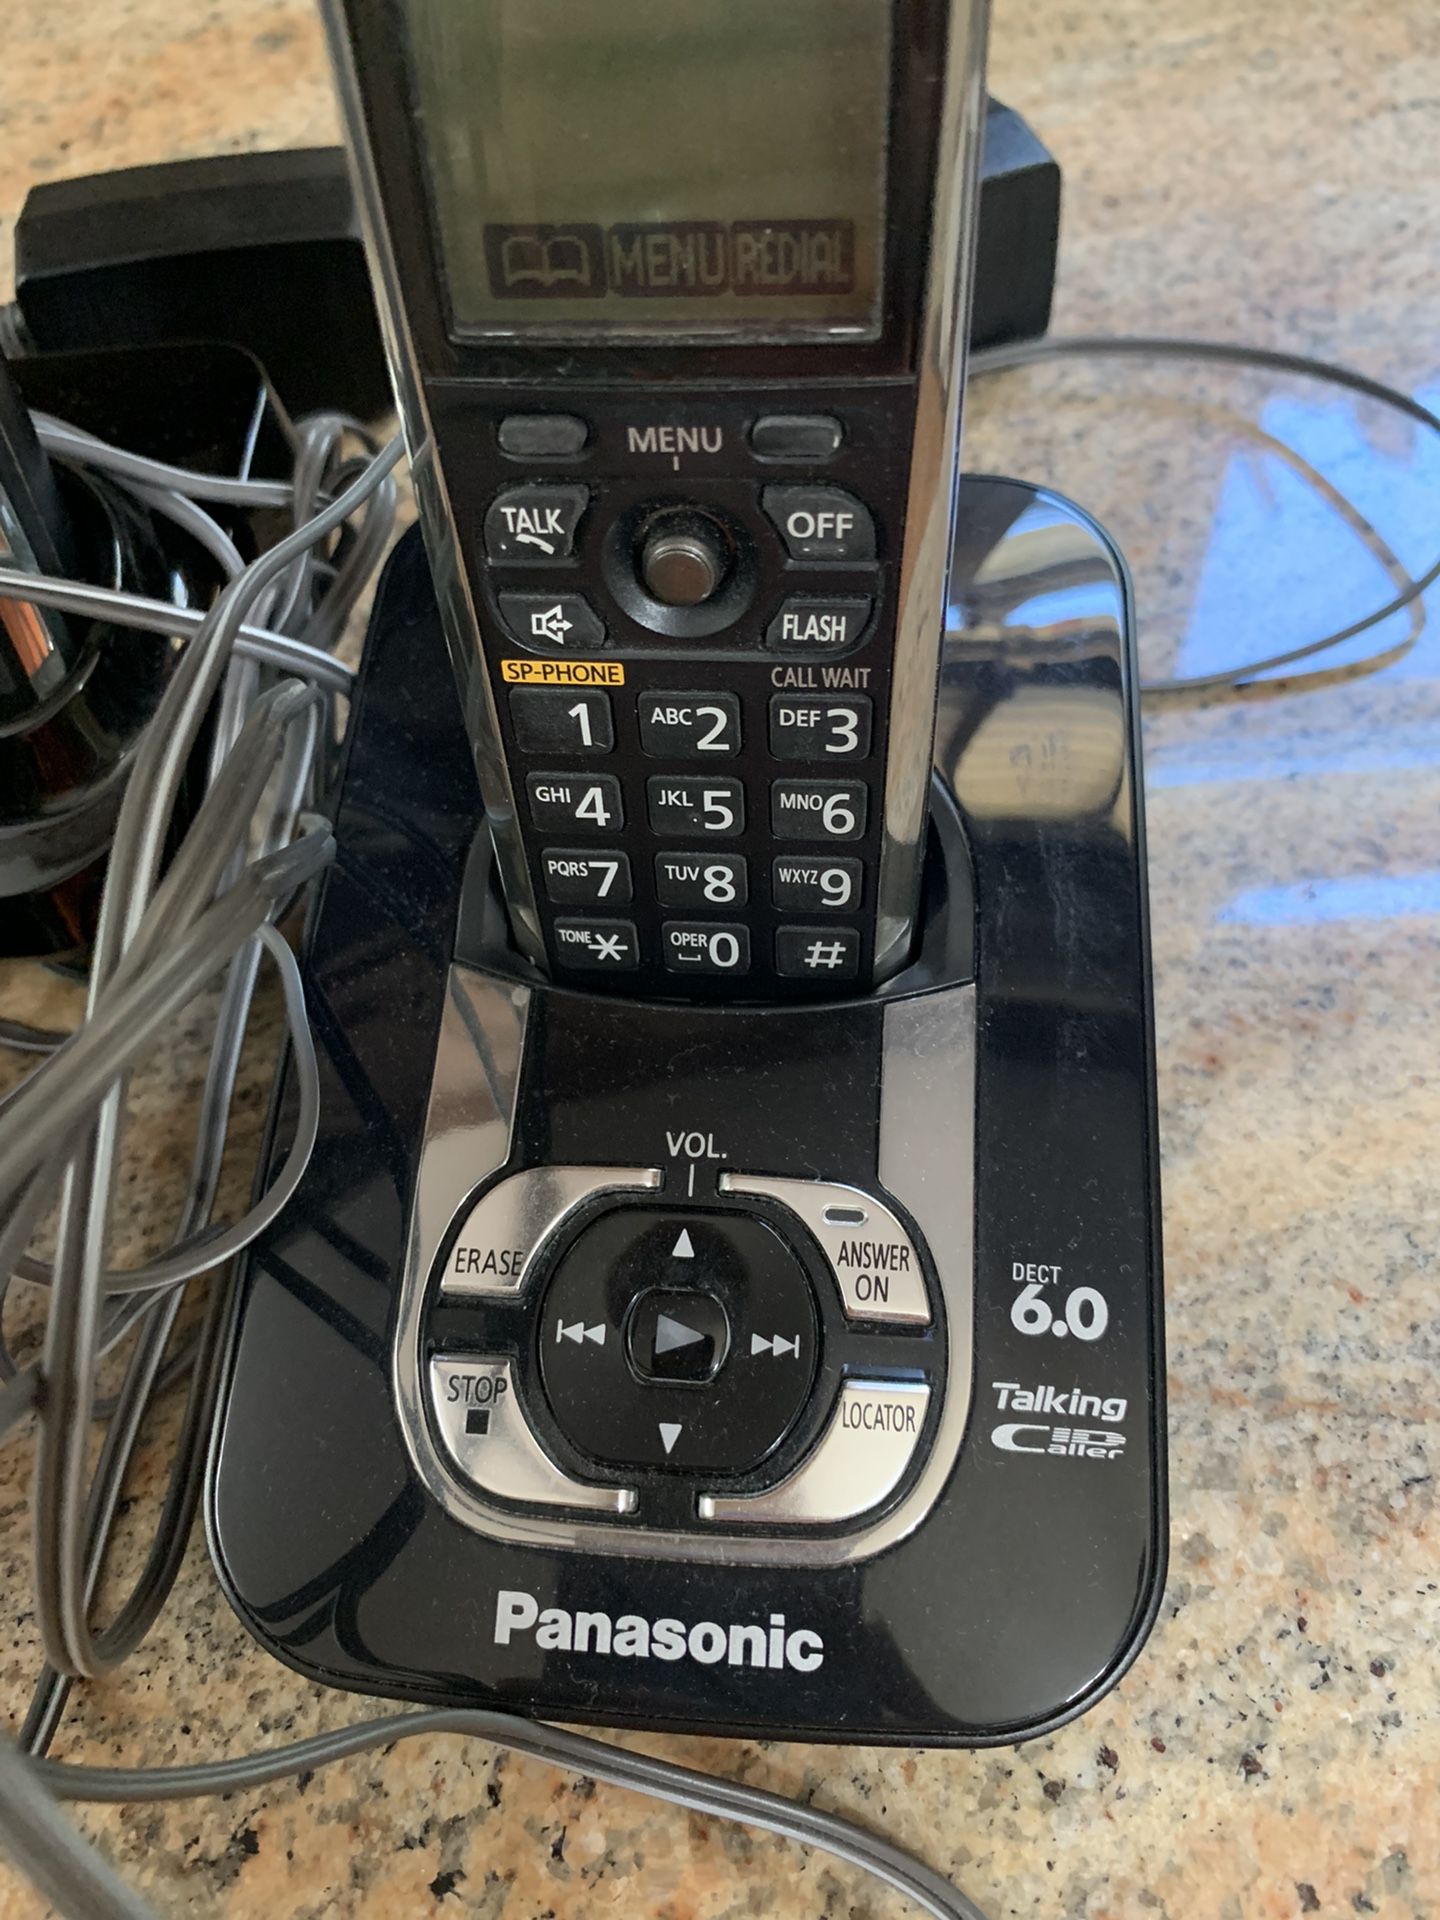 Panasonic Phones Model No. KX-TG7431